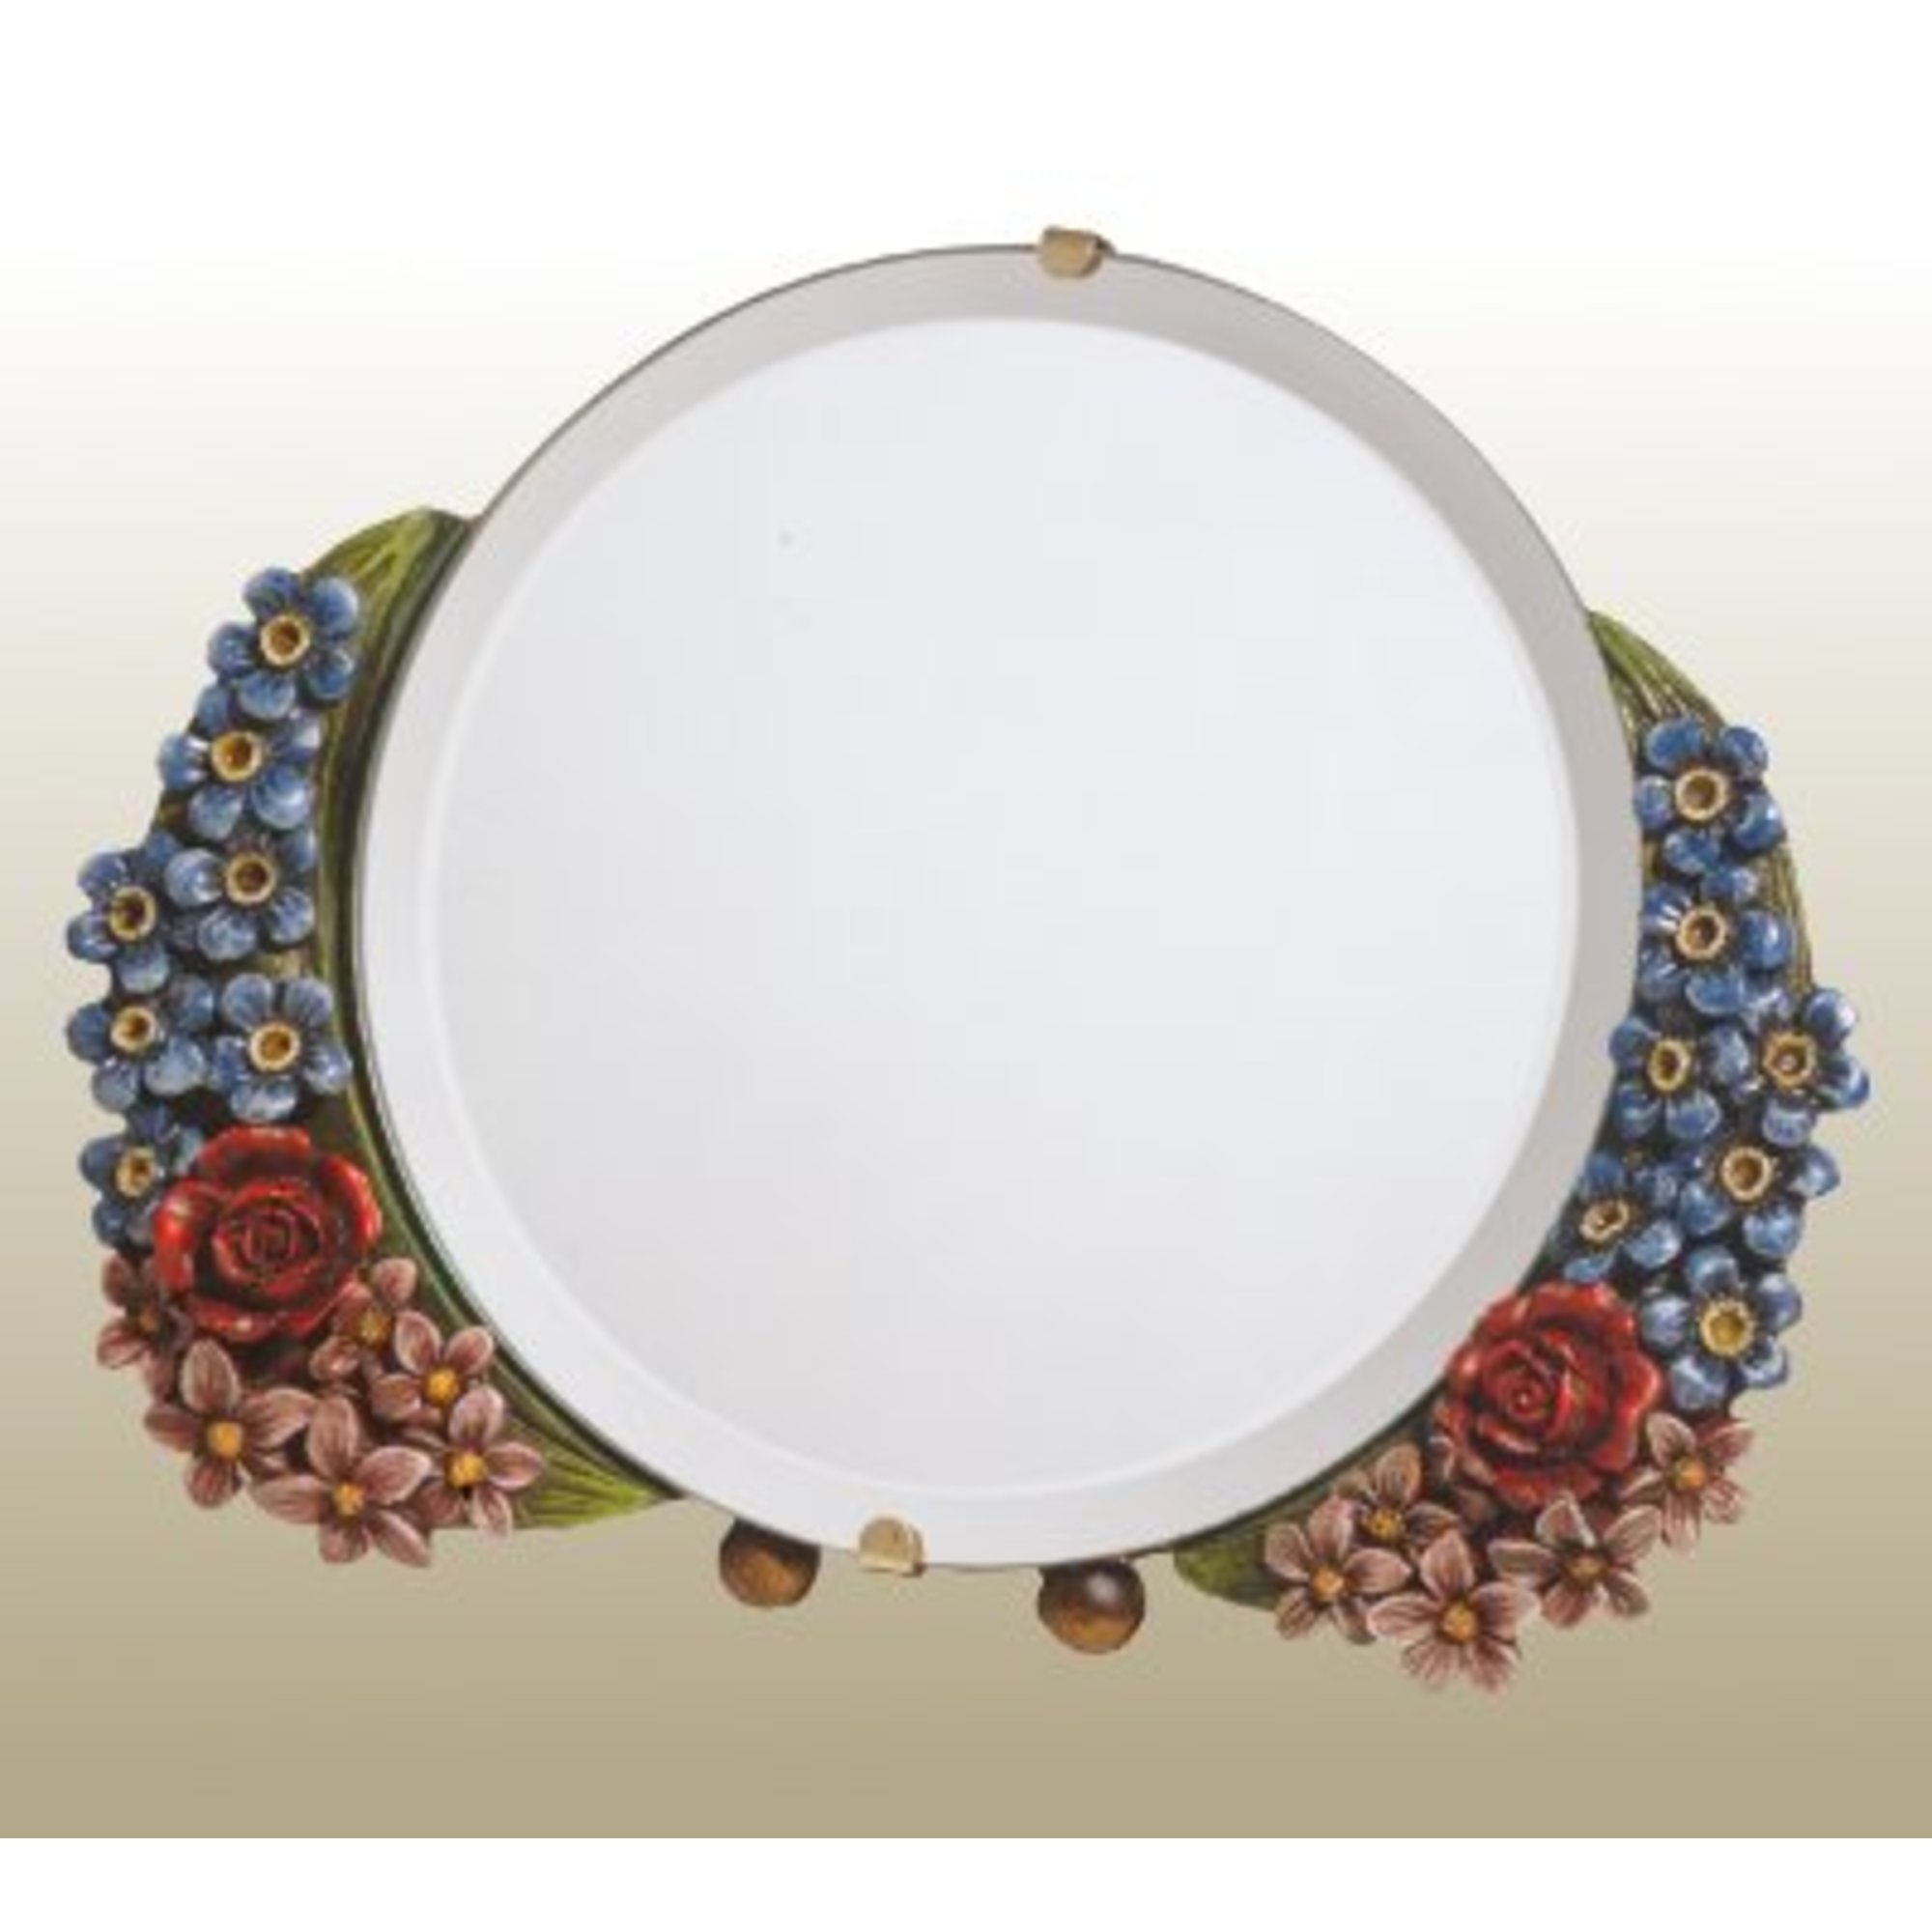 Barbola Floral Multicolour Round Decorative Table or Wall Bedroom Mirror